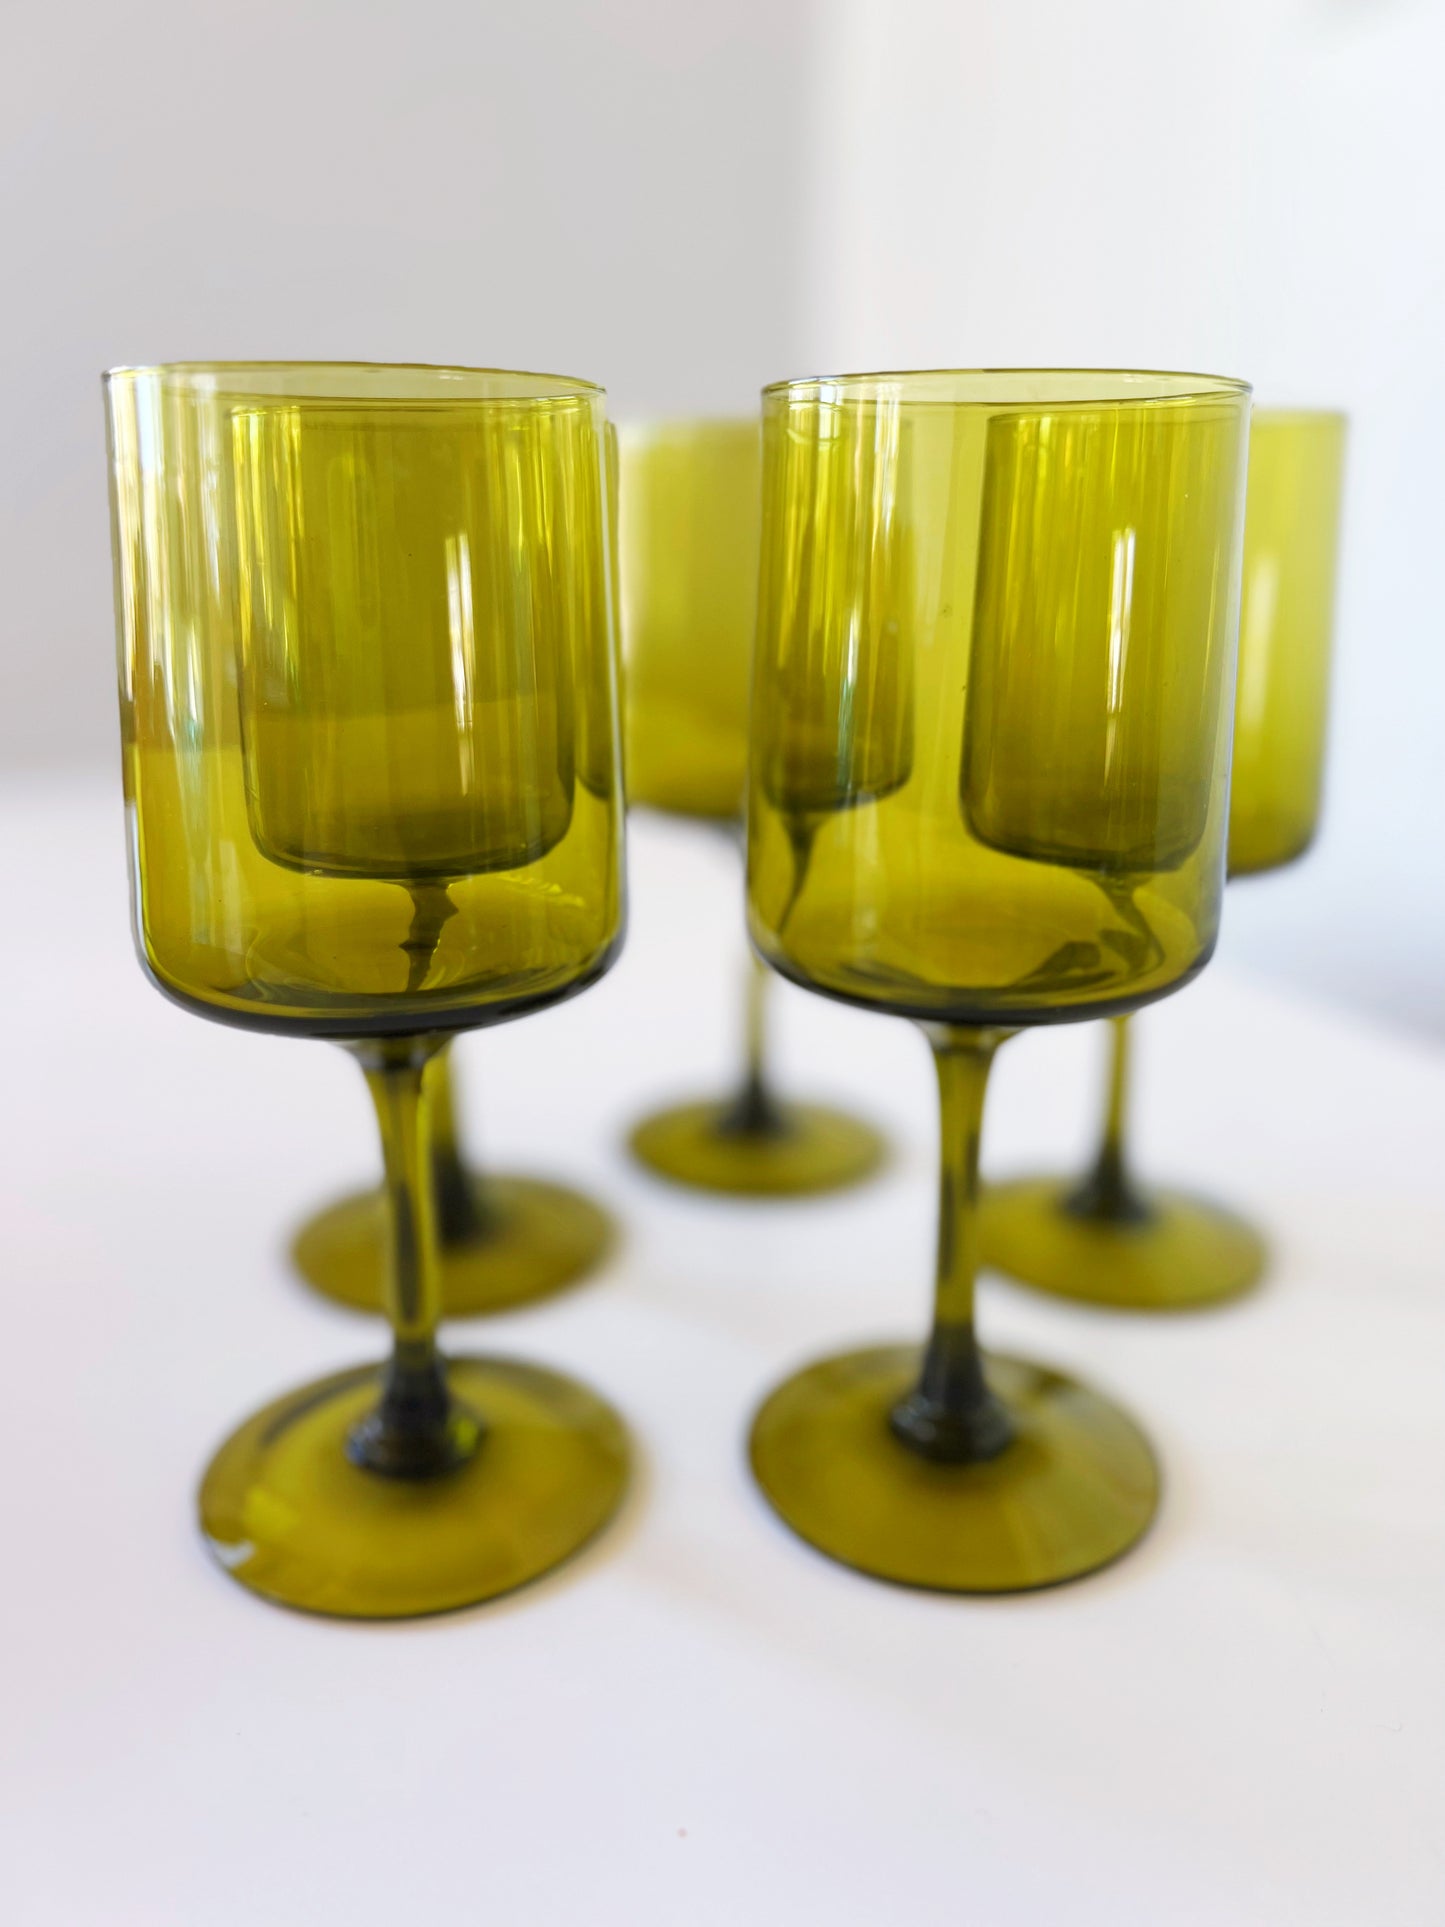 Olive the Mid Century Wine Glasses